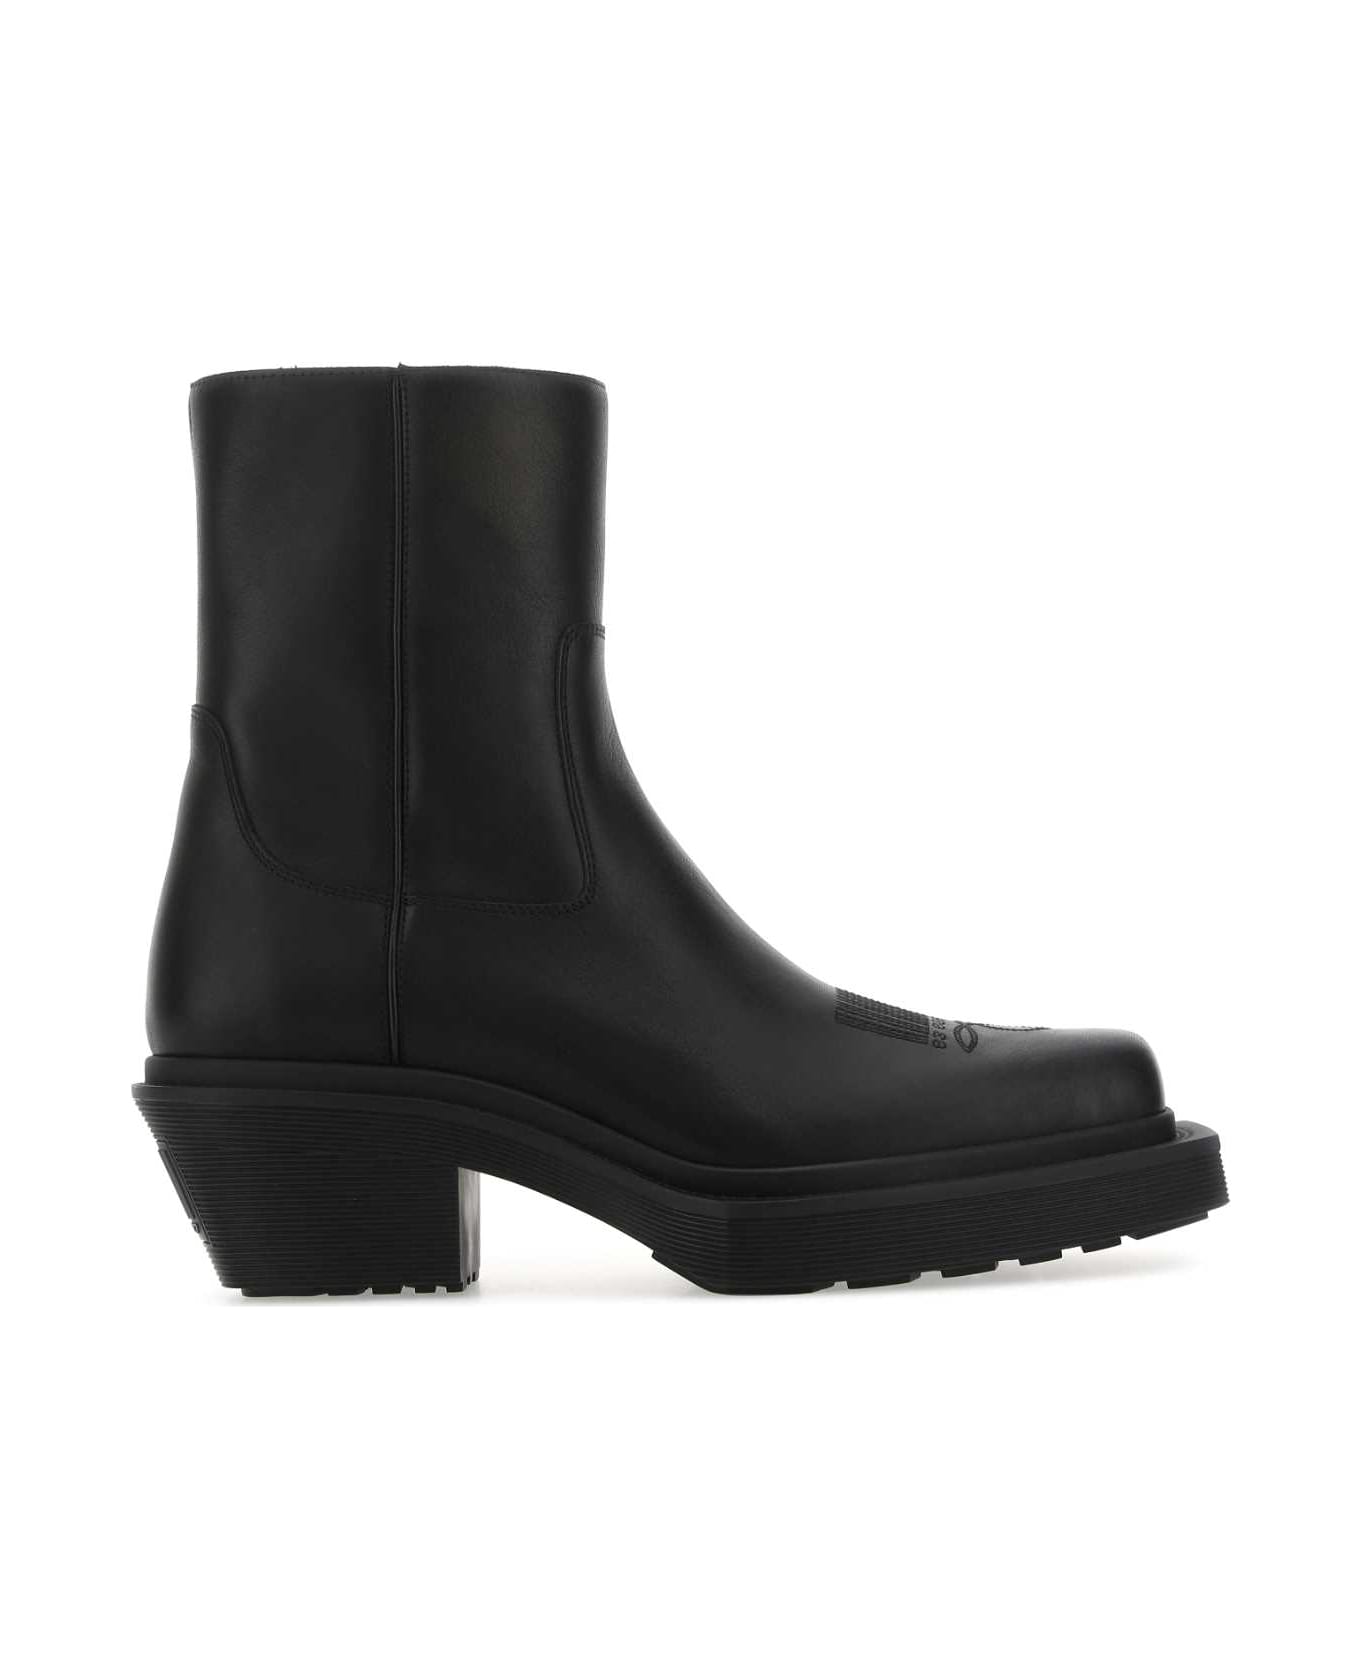 VTMNTS Black Leather Ankle Boots - MATTEBLACK